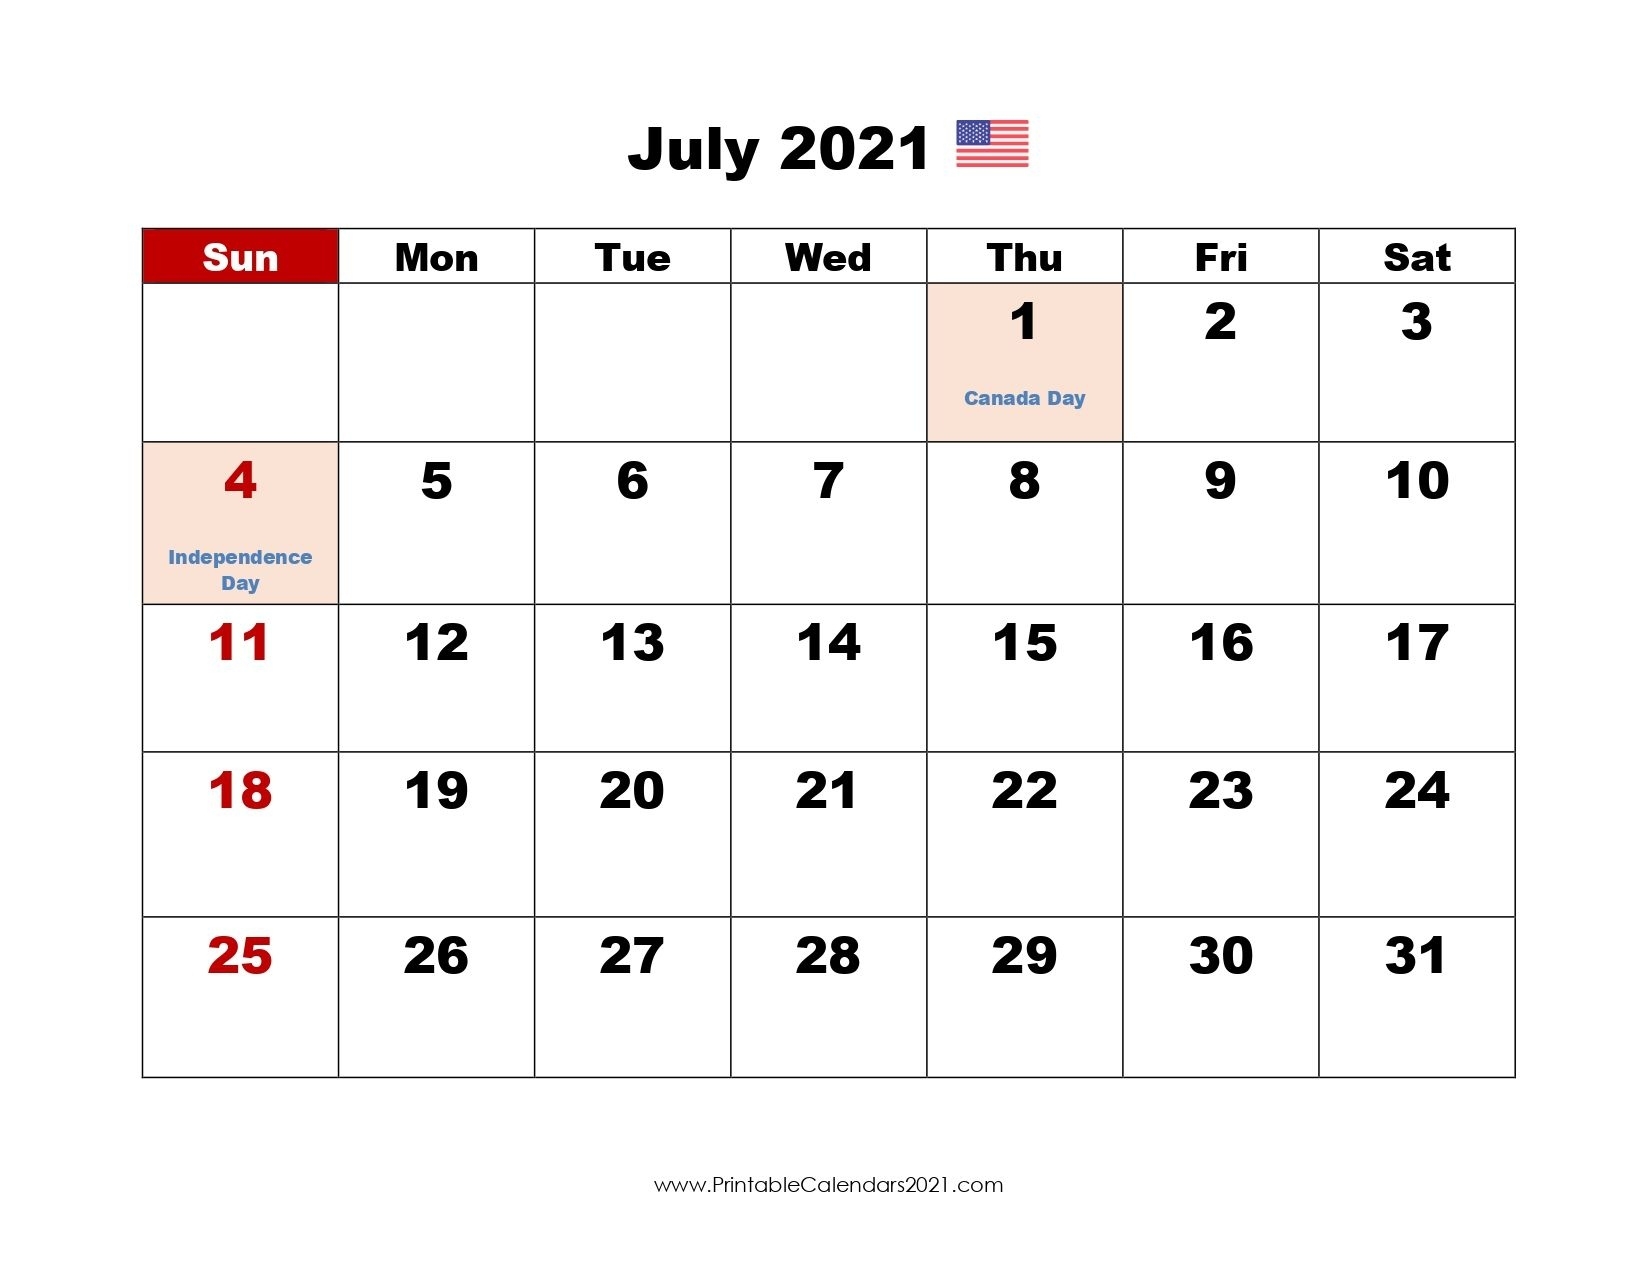 July 2021 Calendar In 2020 | June Calendar Printable, Printable Calendar, 2021 Calendar Free Printable Calendar July 2020 To June 2021